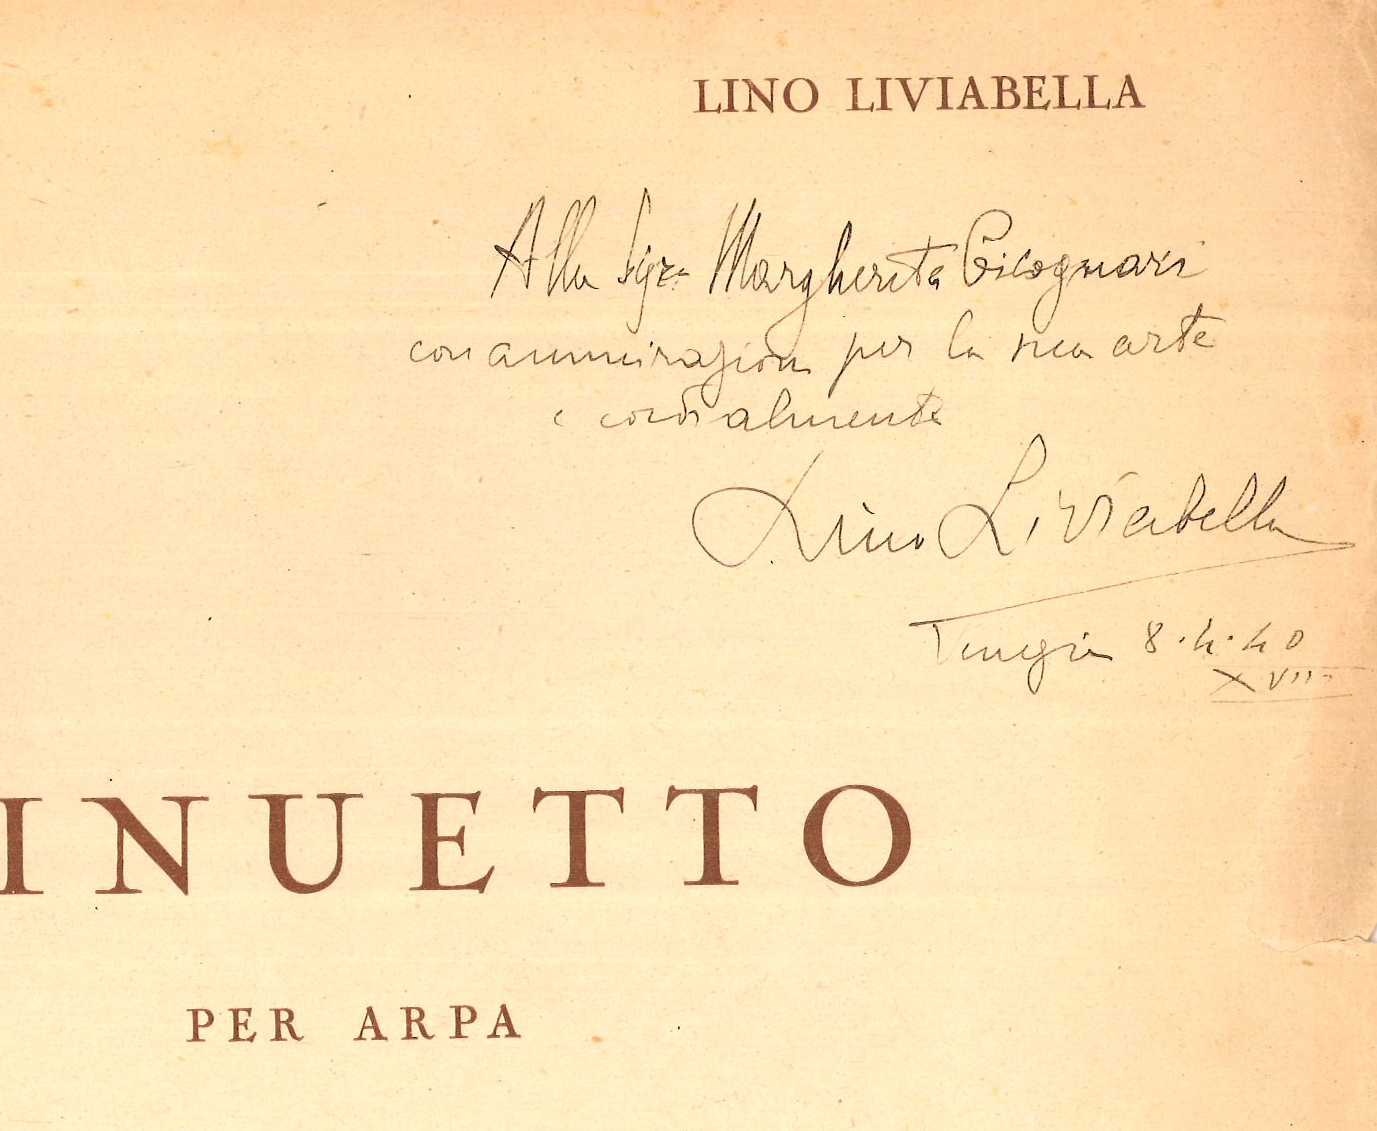 Minuetto for harp by Lino Liviabella, with autograph dedication to Cicognari, 1940. E03089.